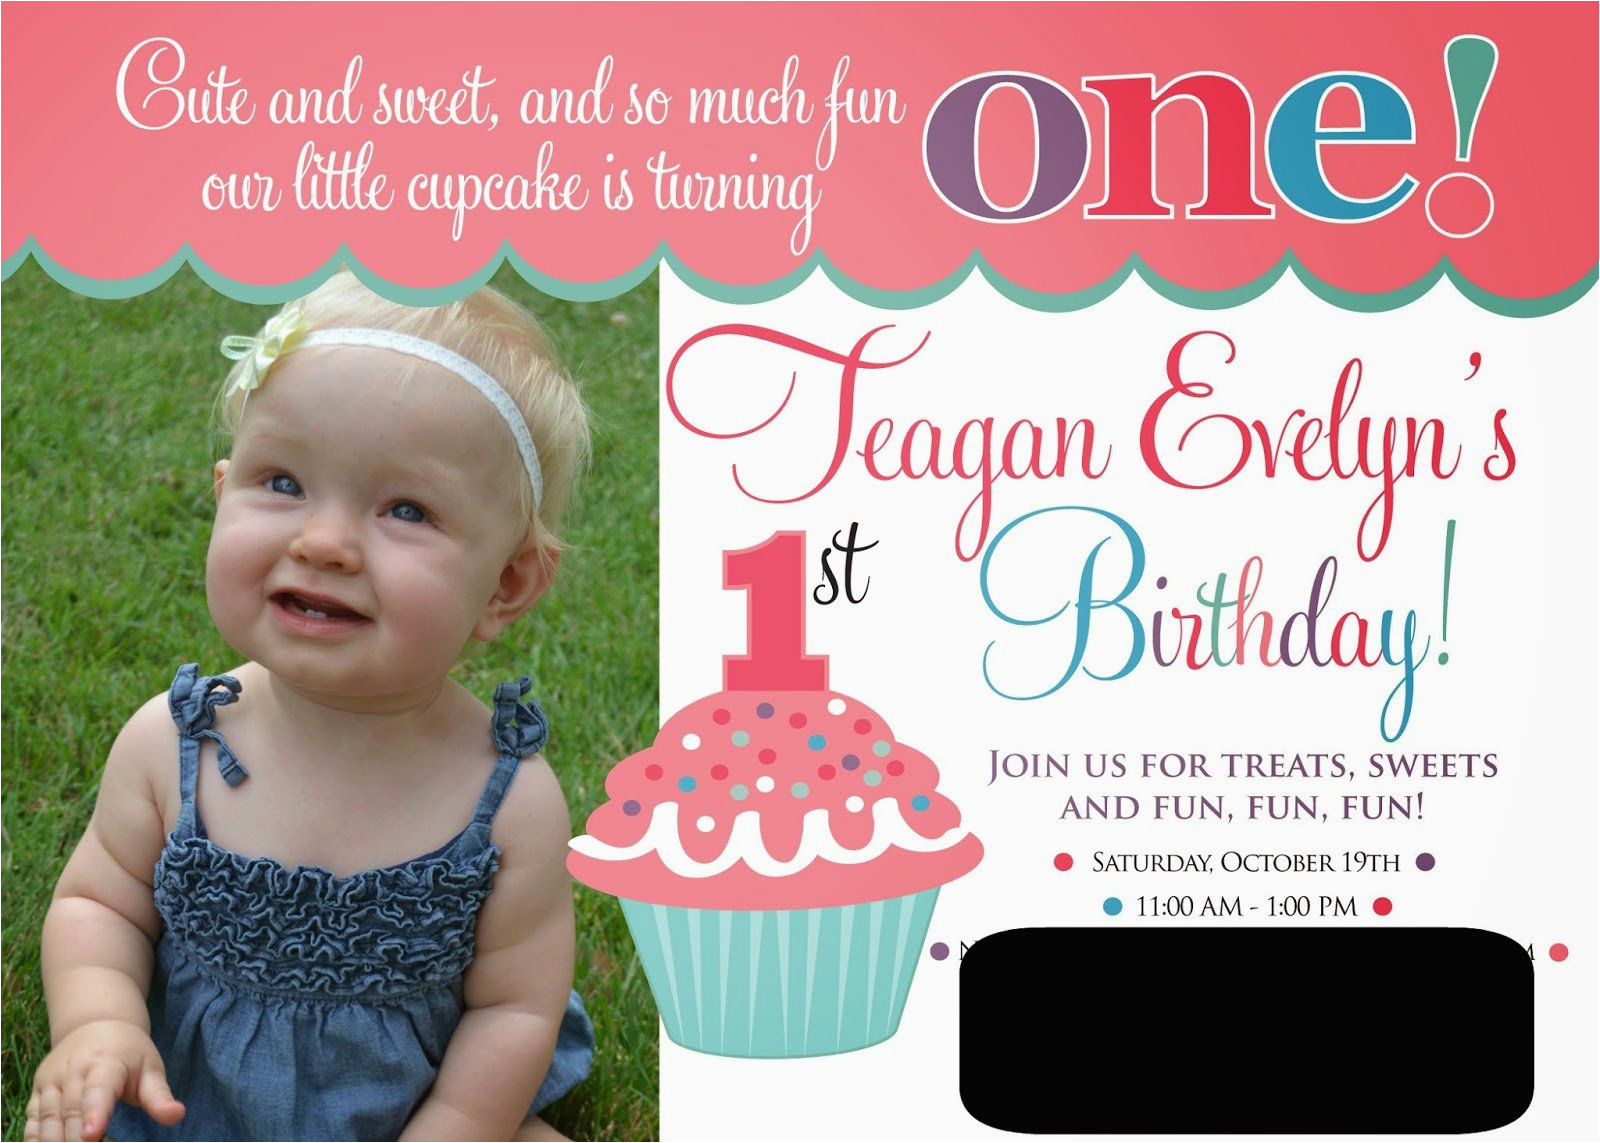 e invitations for 1st birthday